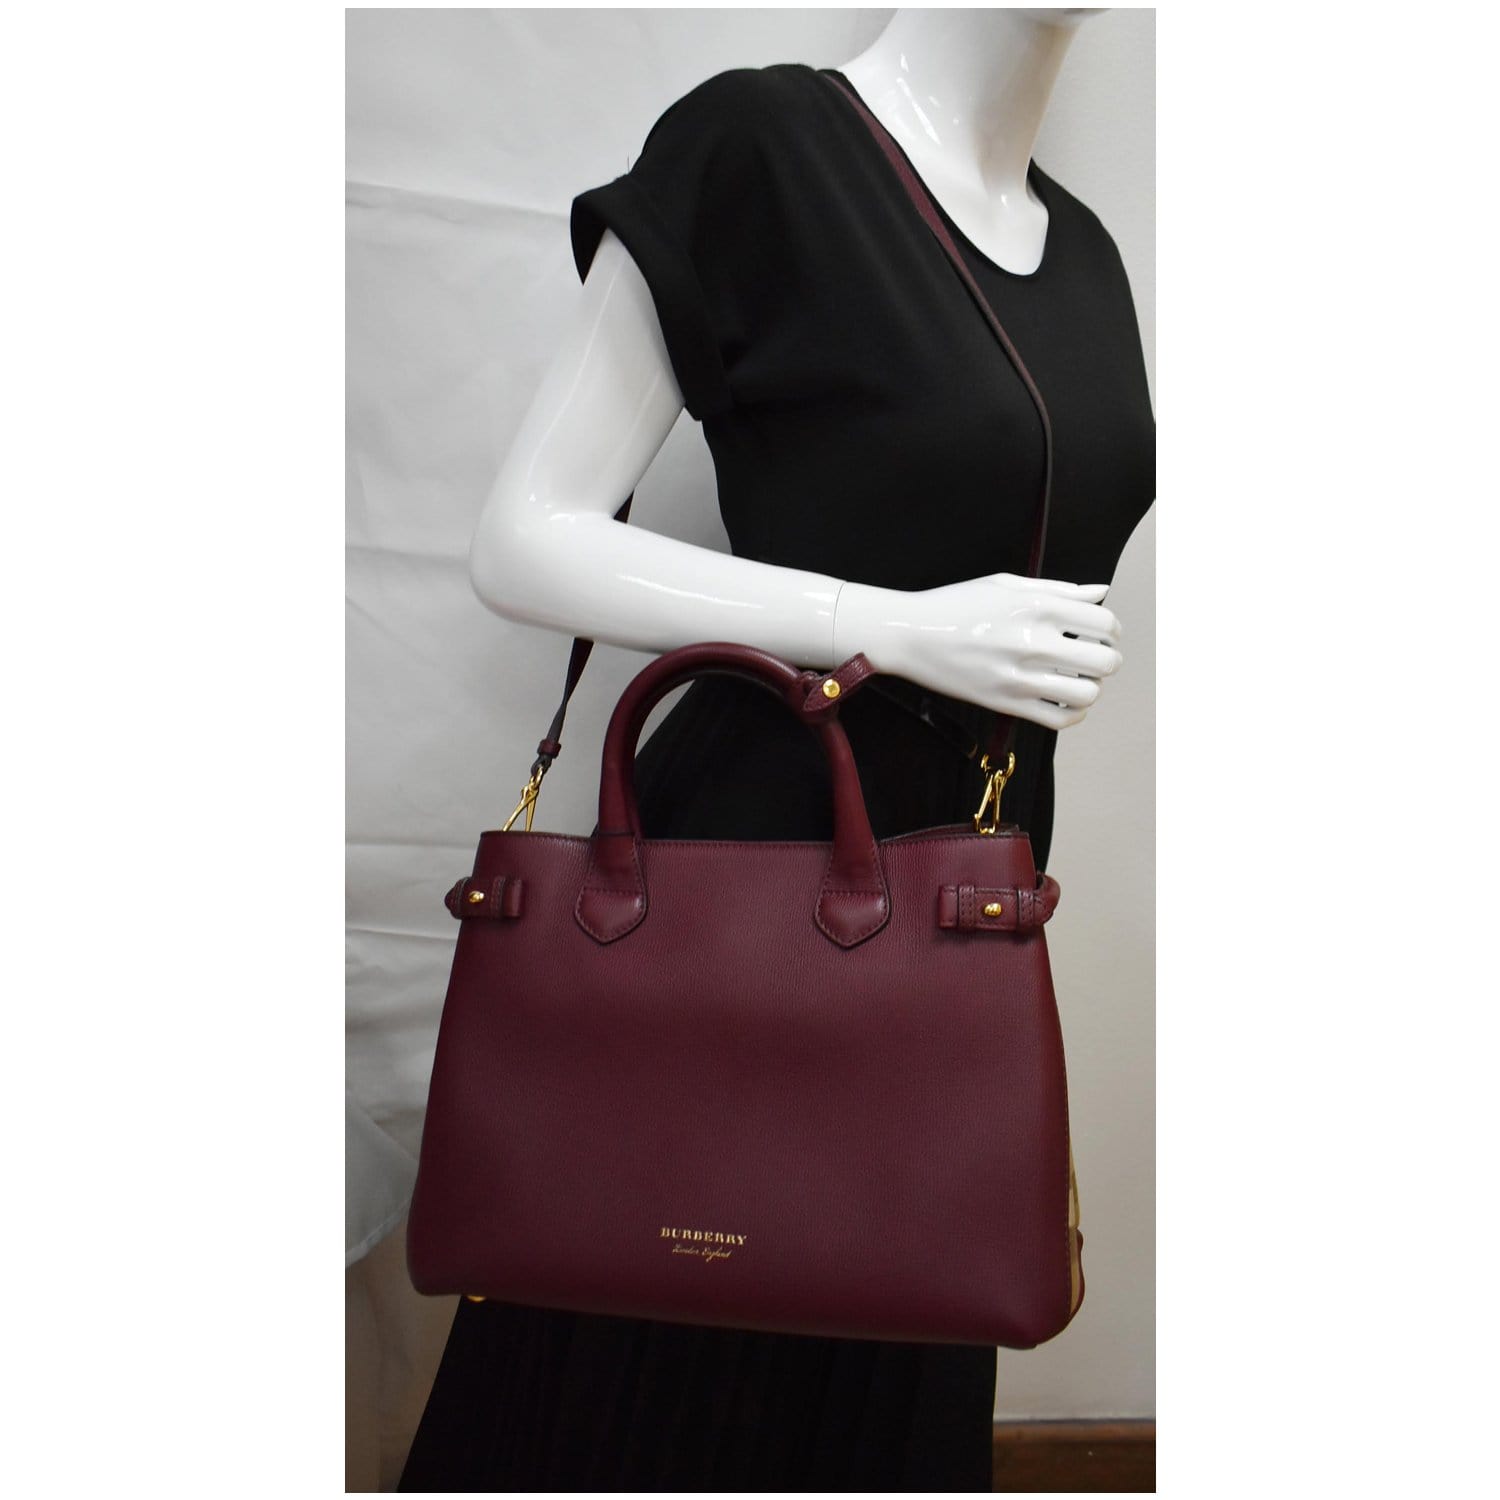 Buy Tote Bag Handbag Authentic Burberry Medium Banner in Leather